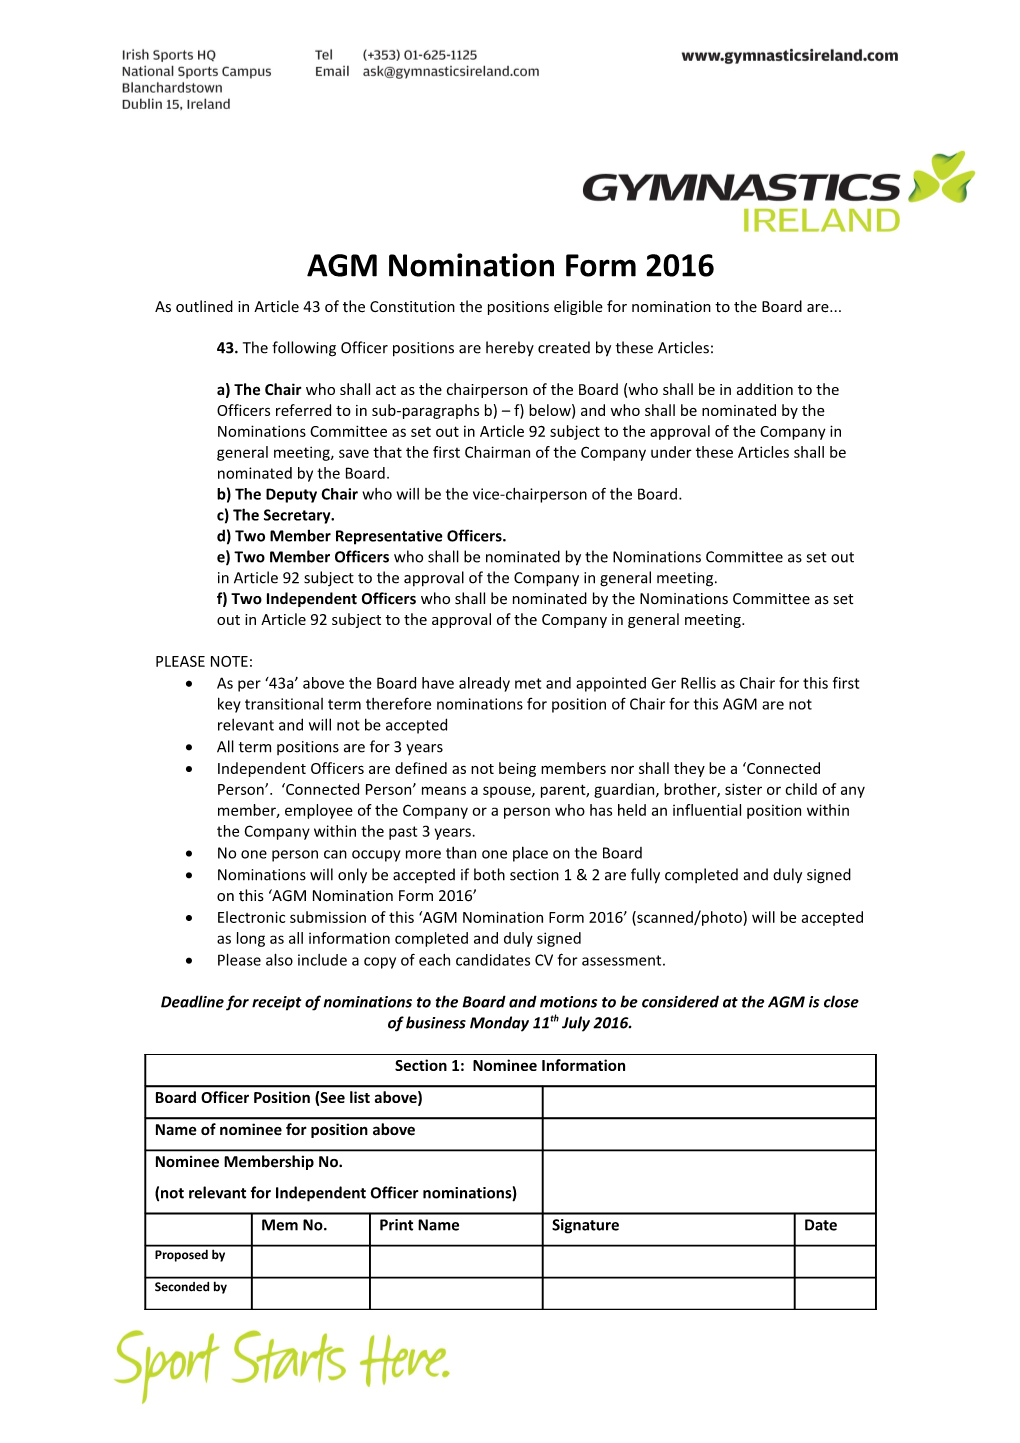 AGM Nomination Form 2016